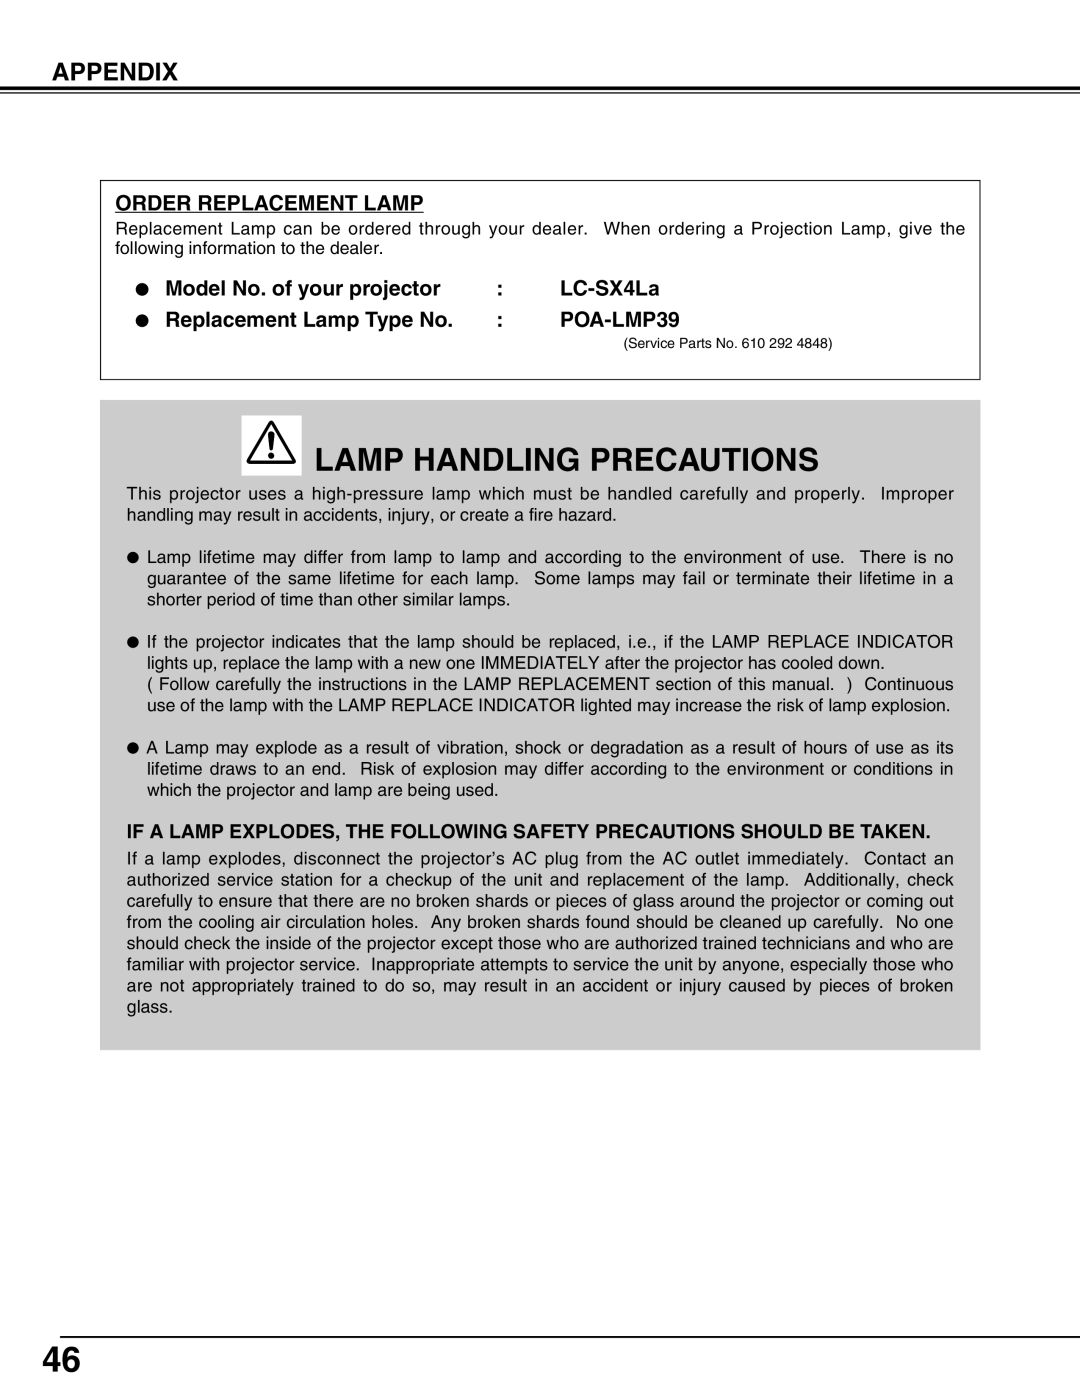 Eiki LC-SX4LA Lamp Handling Precautions, Appendix, Order Replacement Lamp, Model No. of your projector, LC-SX4L a 